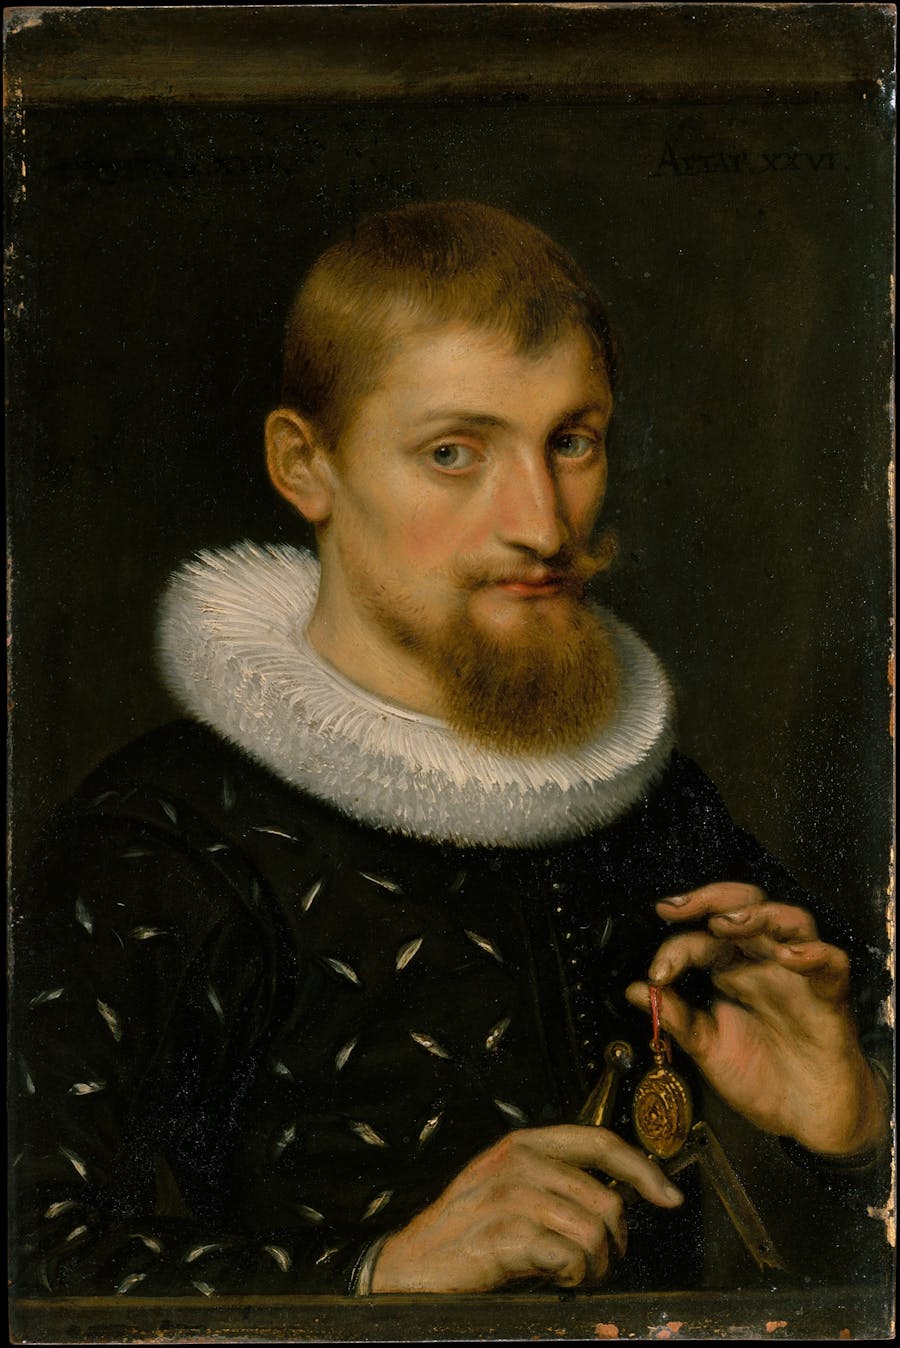 Peter Paul Rubens, Portrait of a Young Scholar. 1597, oil on copper. Image: CC0